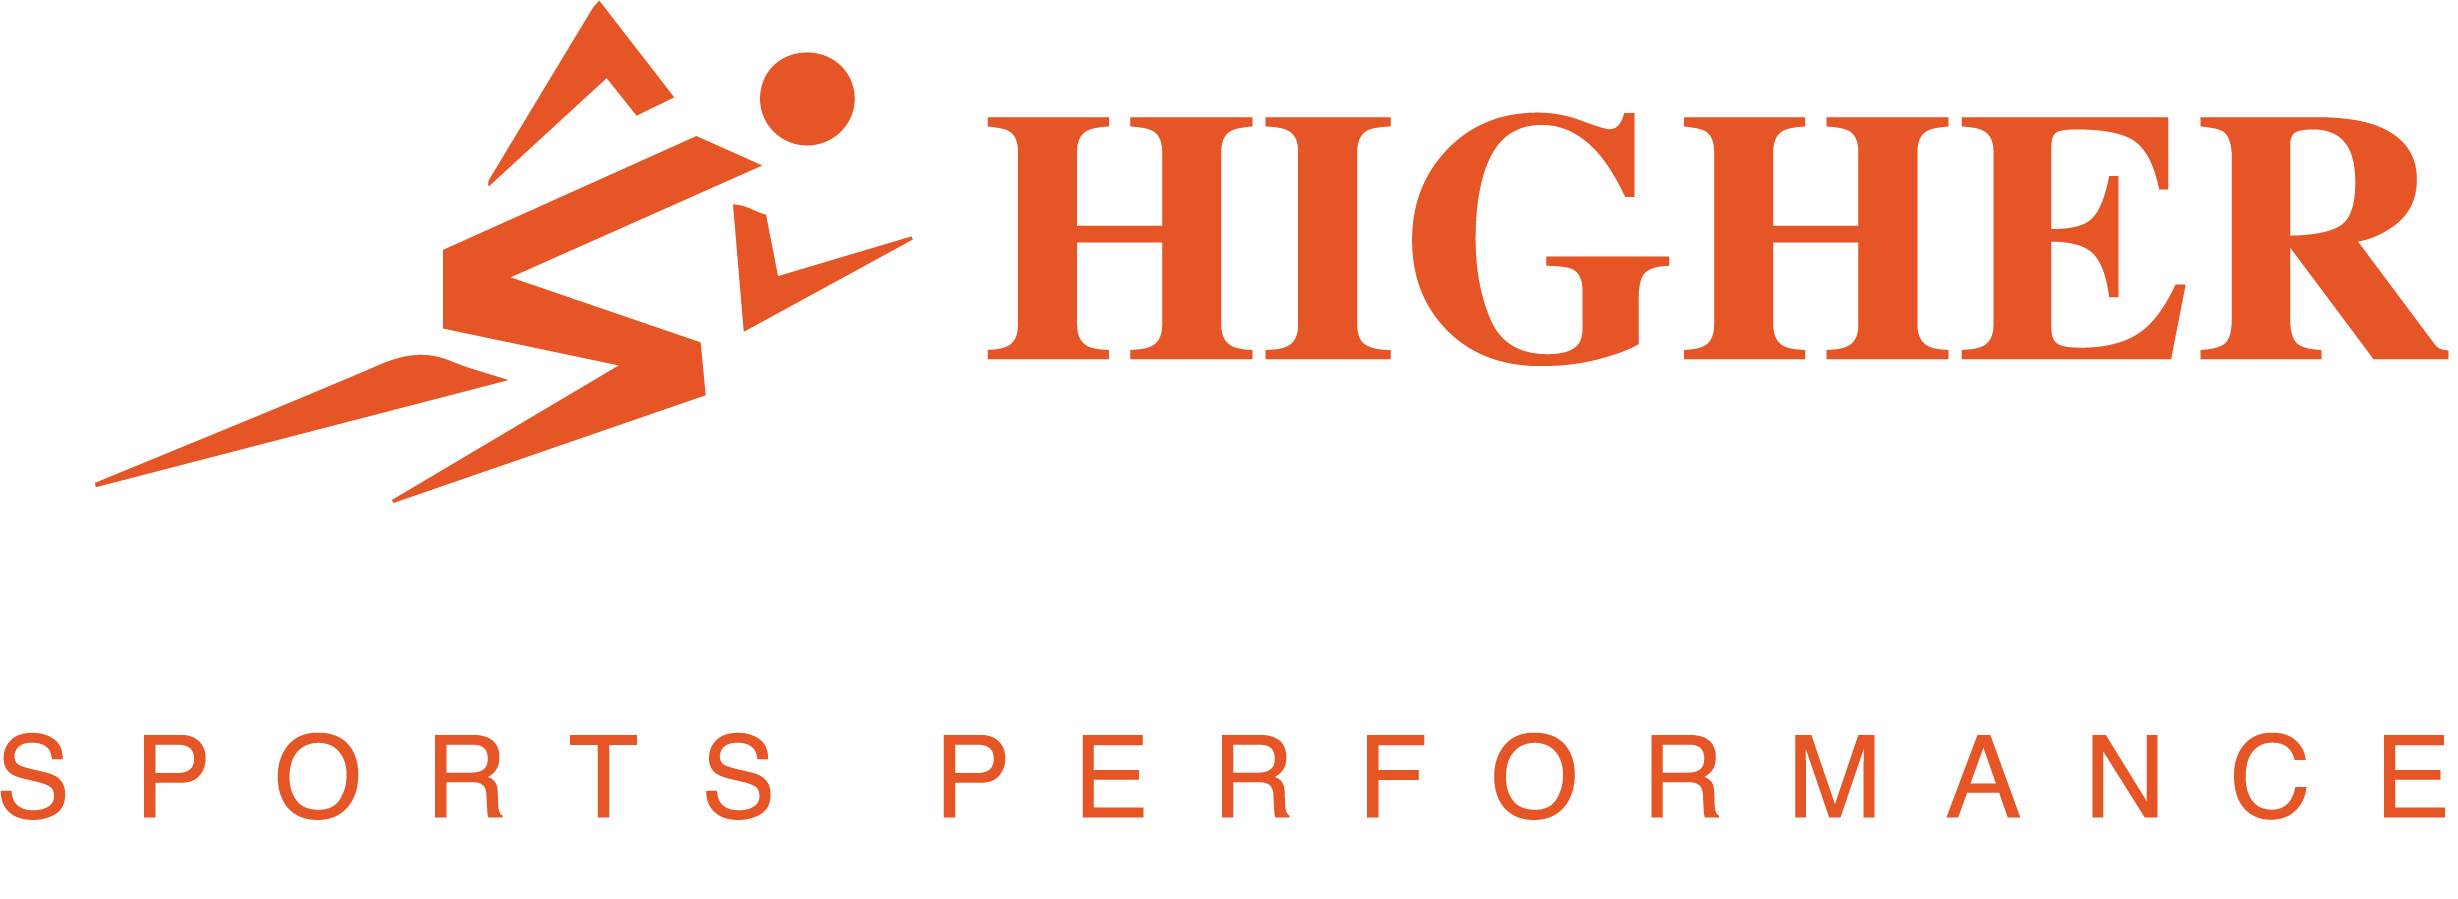 higher-level